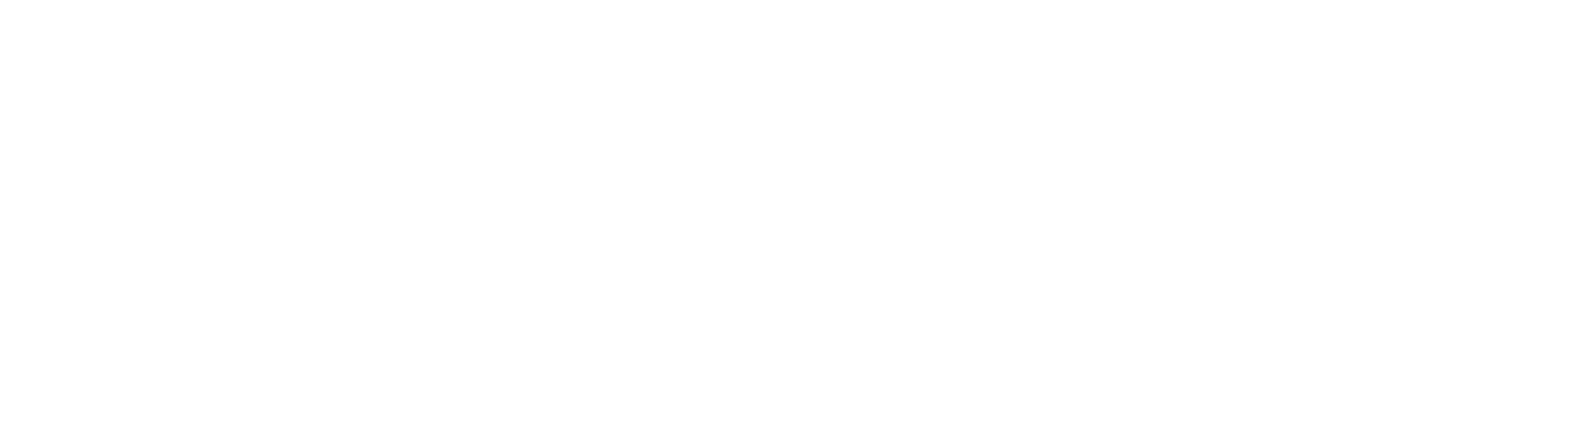 Inspira Technologies logo large for dark backgrounds (transparent PNG)